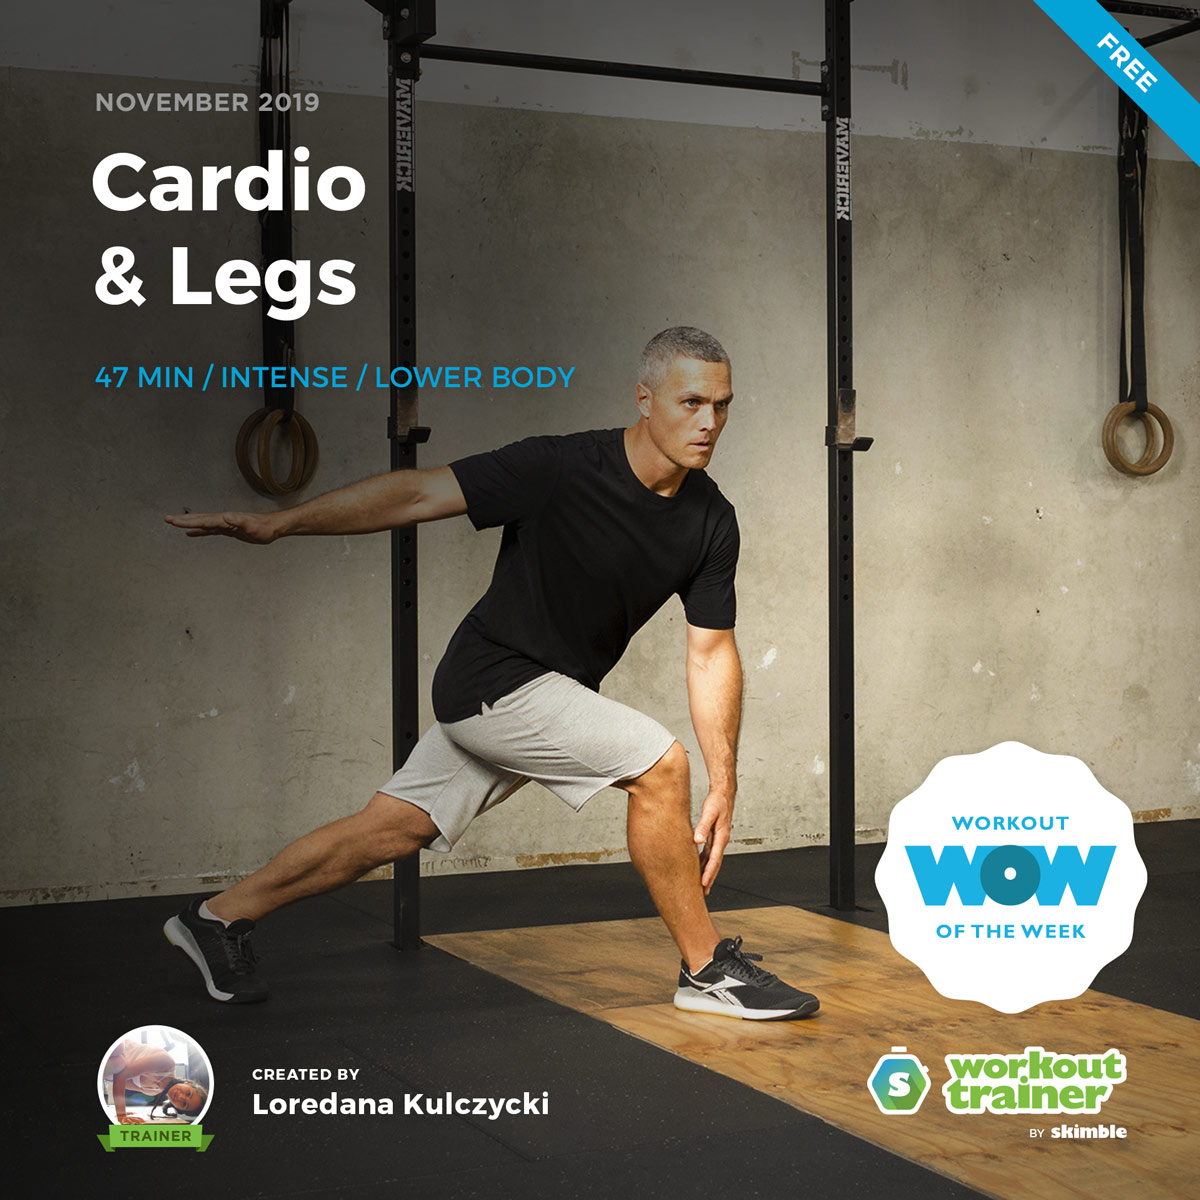 Workout Trainer by Skimble: Free Workout of the Week: Cardio & Legs by Loredana Kulczycki